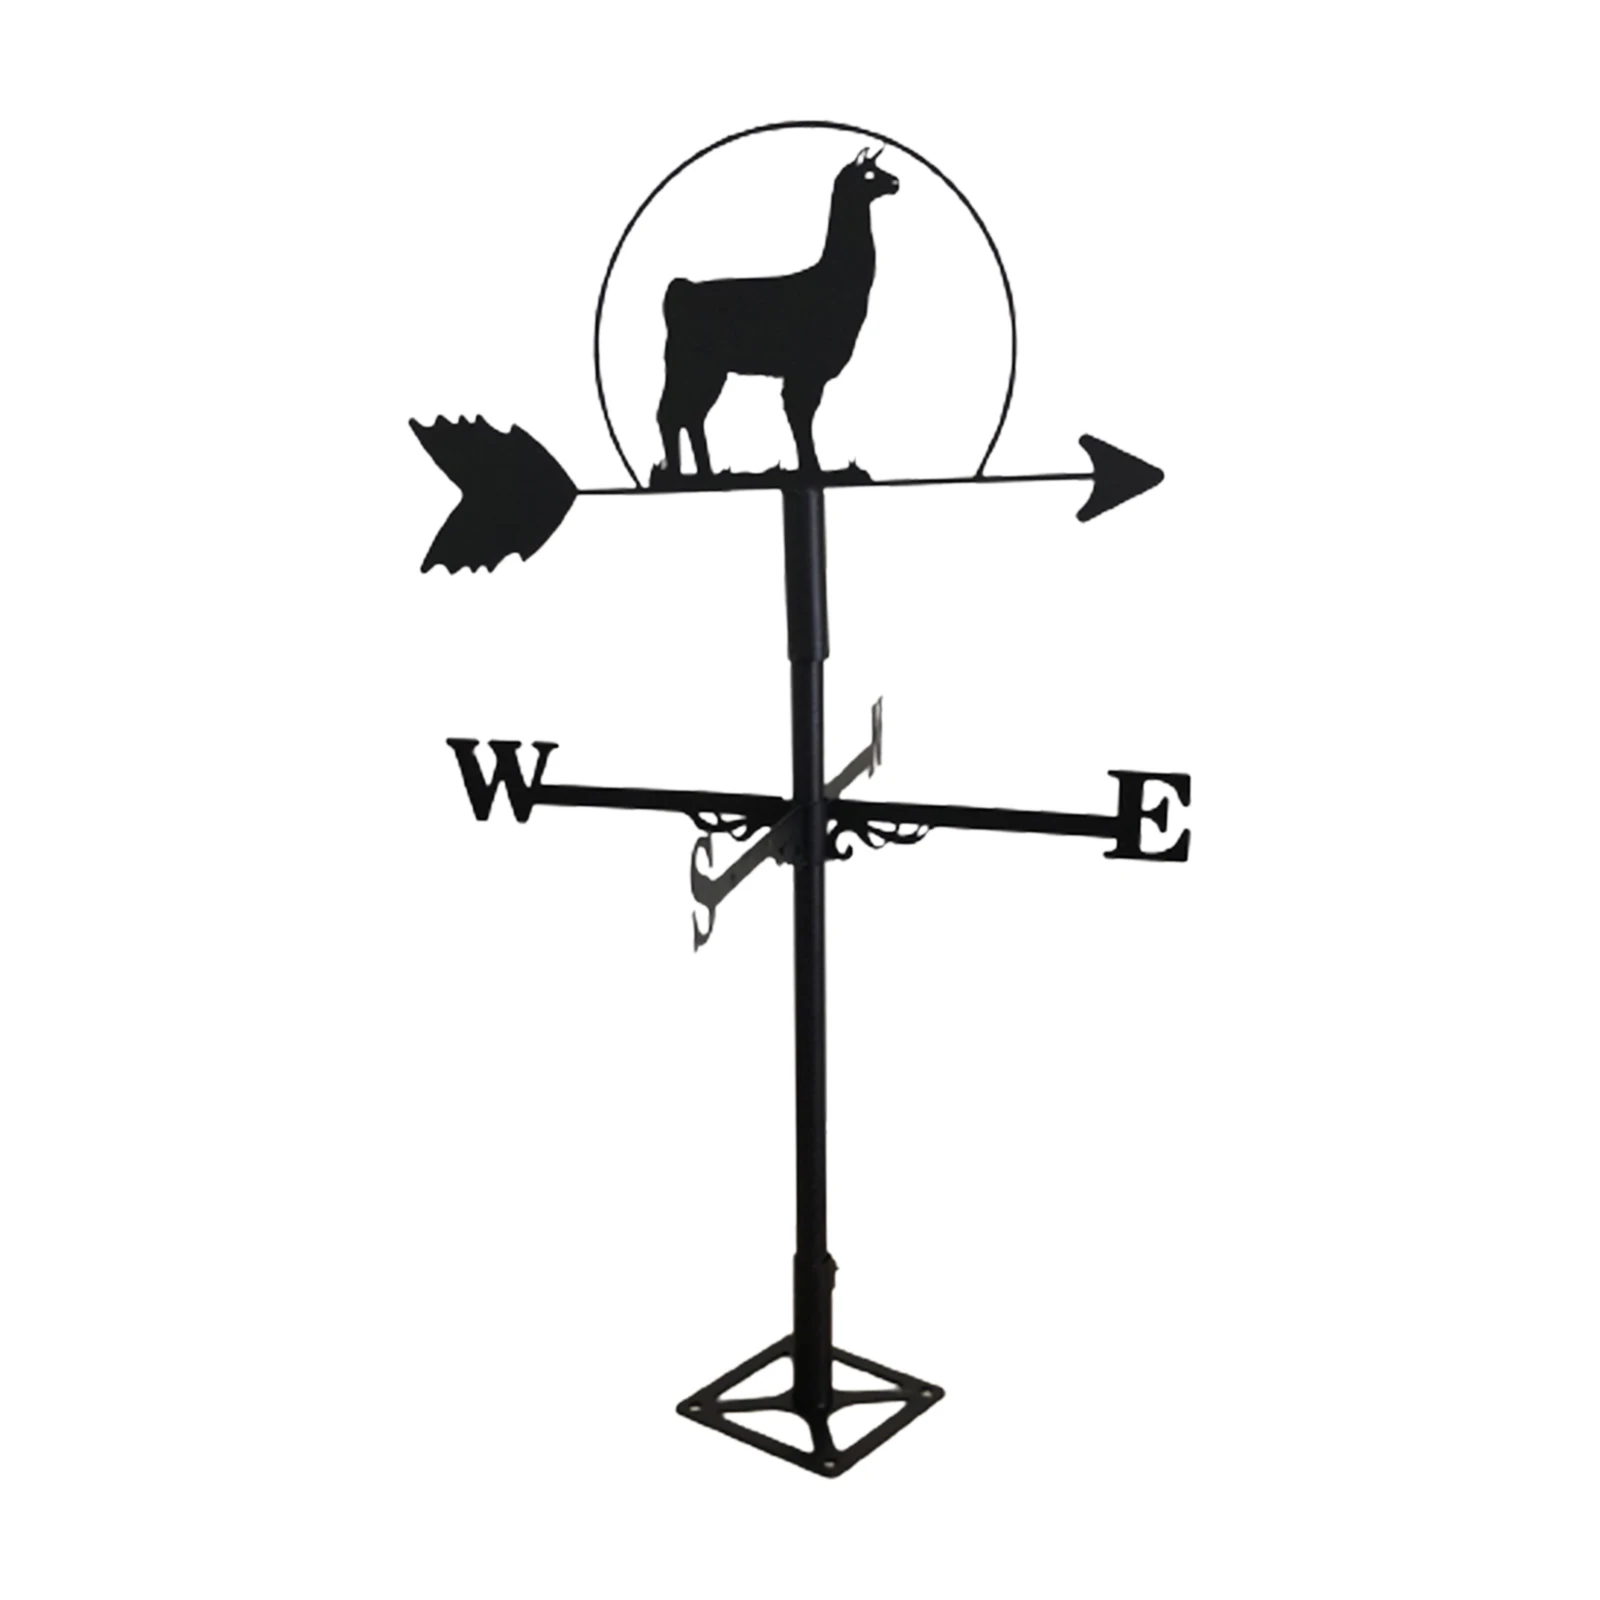 Alpaca Shape Stainless Steel Weathervane Fence Mount Weather Vane Wind Direction Indicator Outdoor Garden Barn Decor Crafts